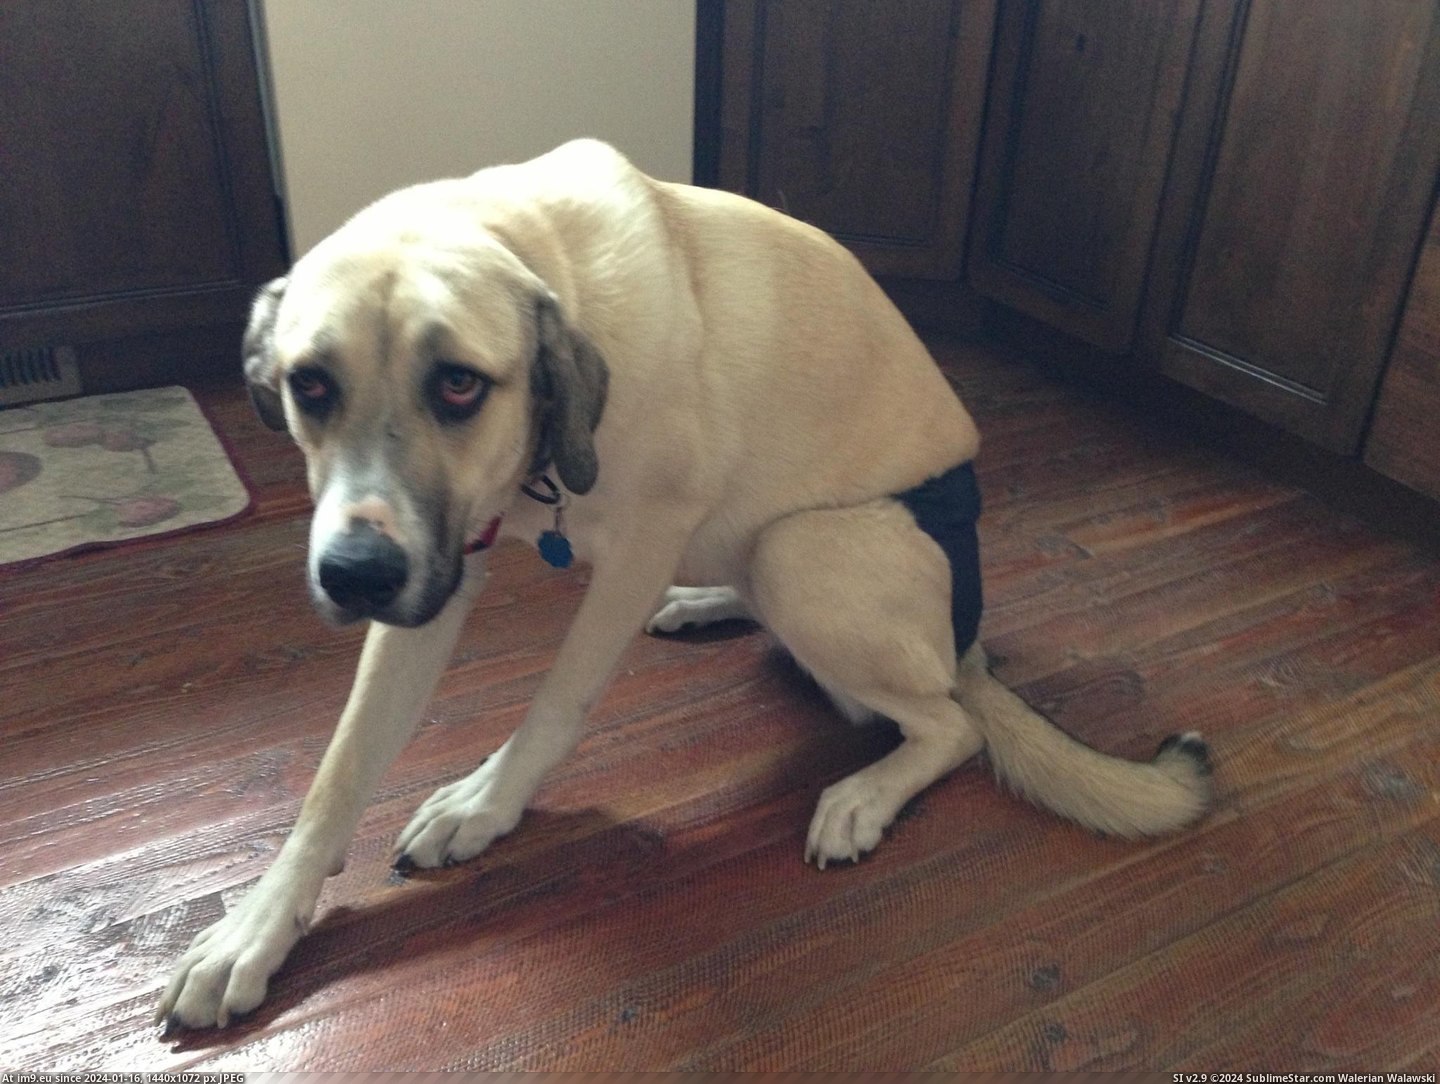 #Friend #Dog #Animal #Diaper #Saddest #Wear #Any #Poor [Aww] My friend's dog has to wear a diaper and it's the saddest I've seen any animal.. Pic. (Bild von album My r/AWW favs))